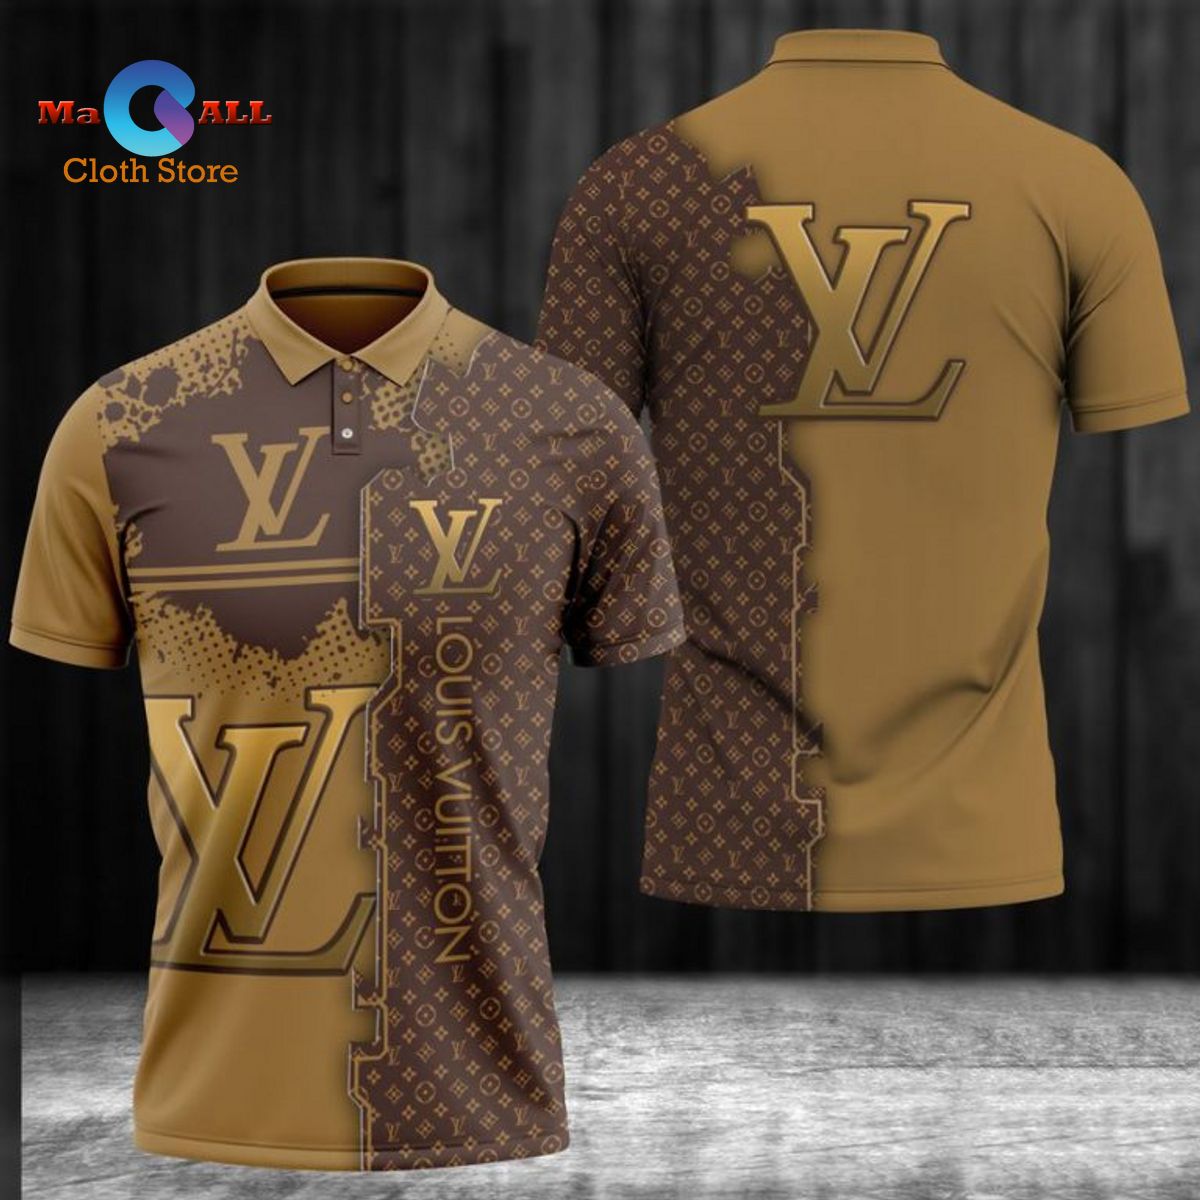 NEW] Louis Vuitton Vertical Textures Luxury Premium For Men LV Polo Shirt -  Macall Cloth Store - Destination for fashionistas